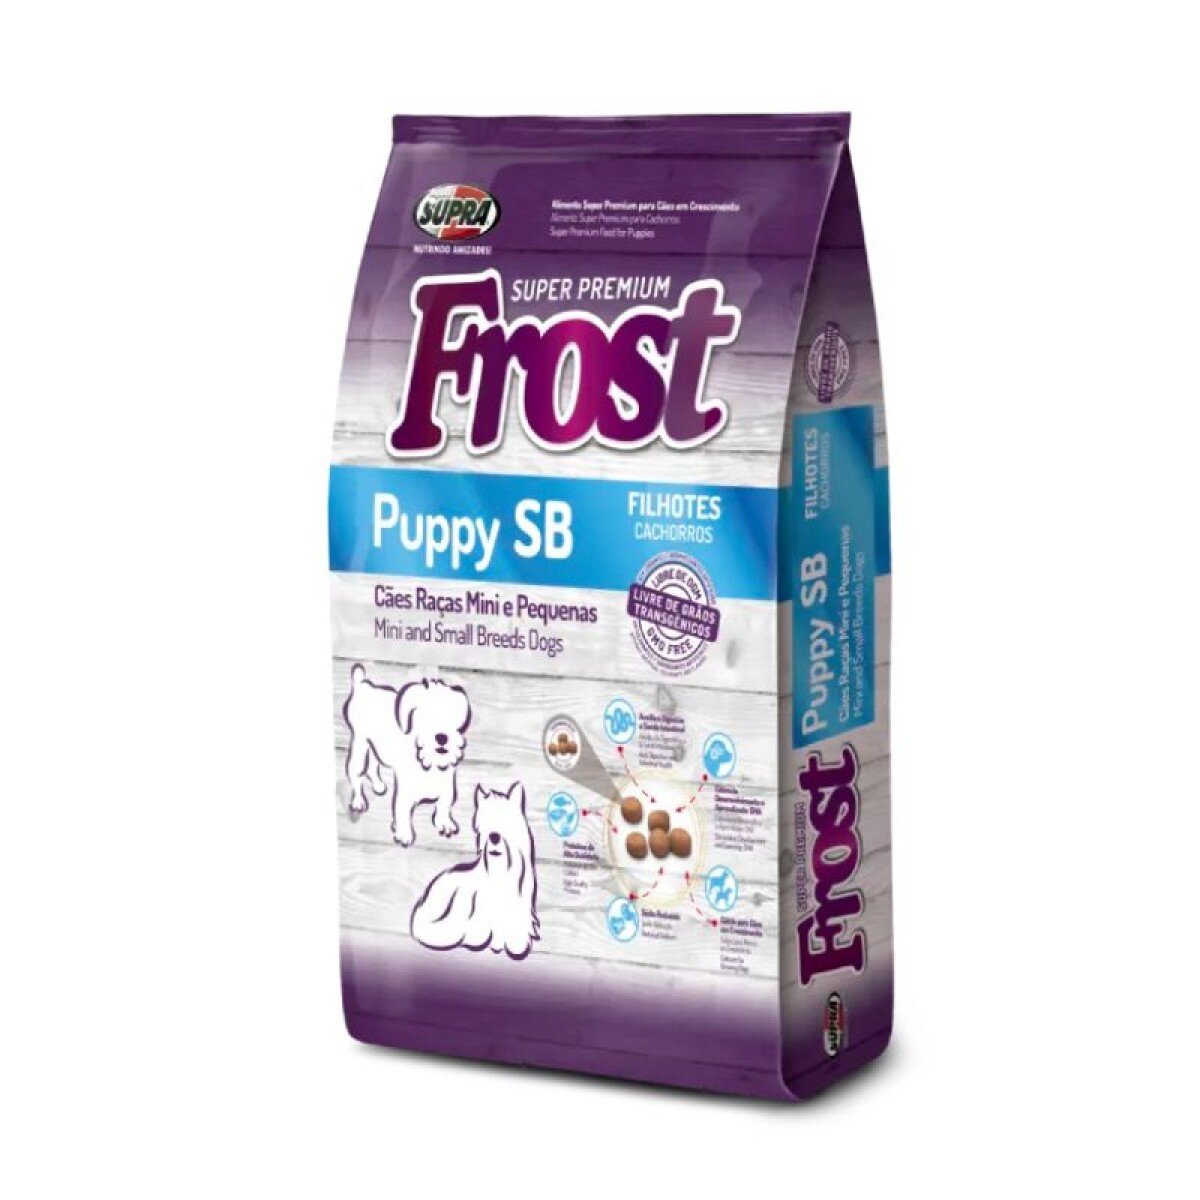 FROST PUPPY SB 1 KG - Frost Puppy Sb 1 Kg 